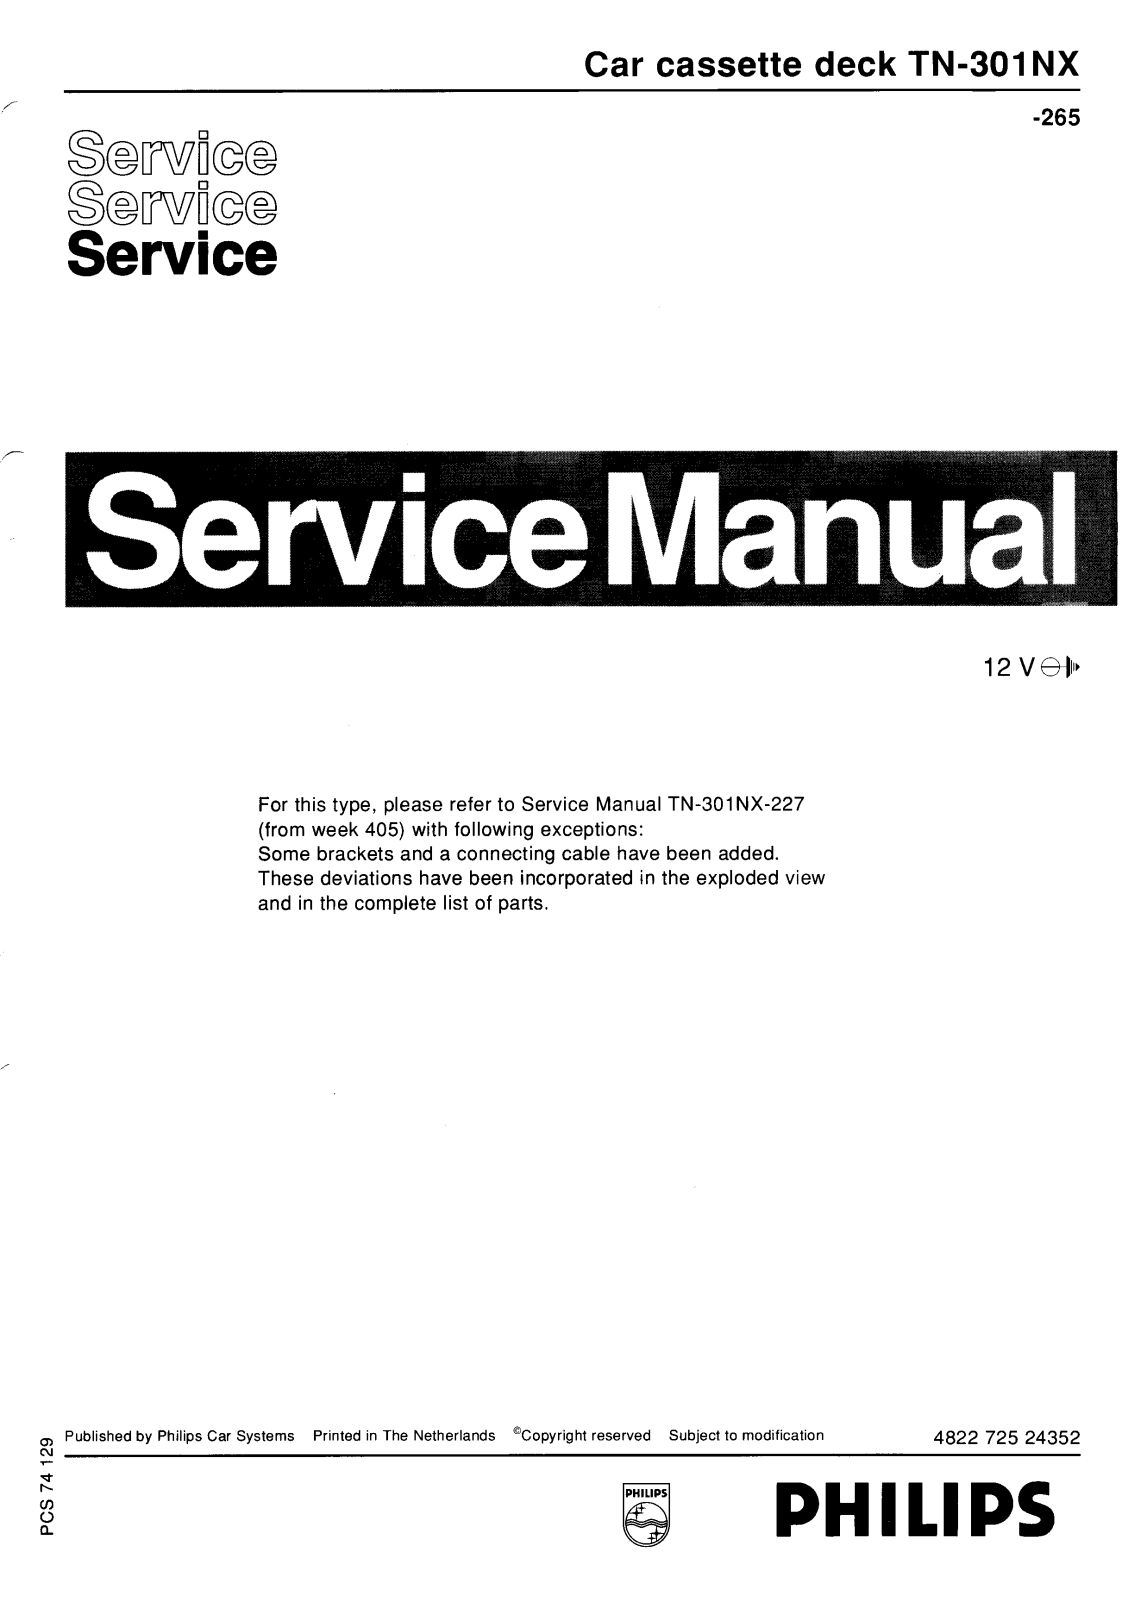 Philips TN301NX-265 Service Manual